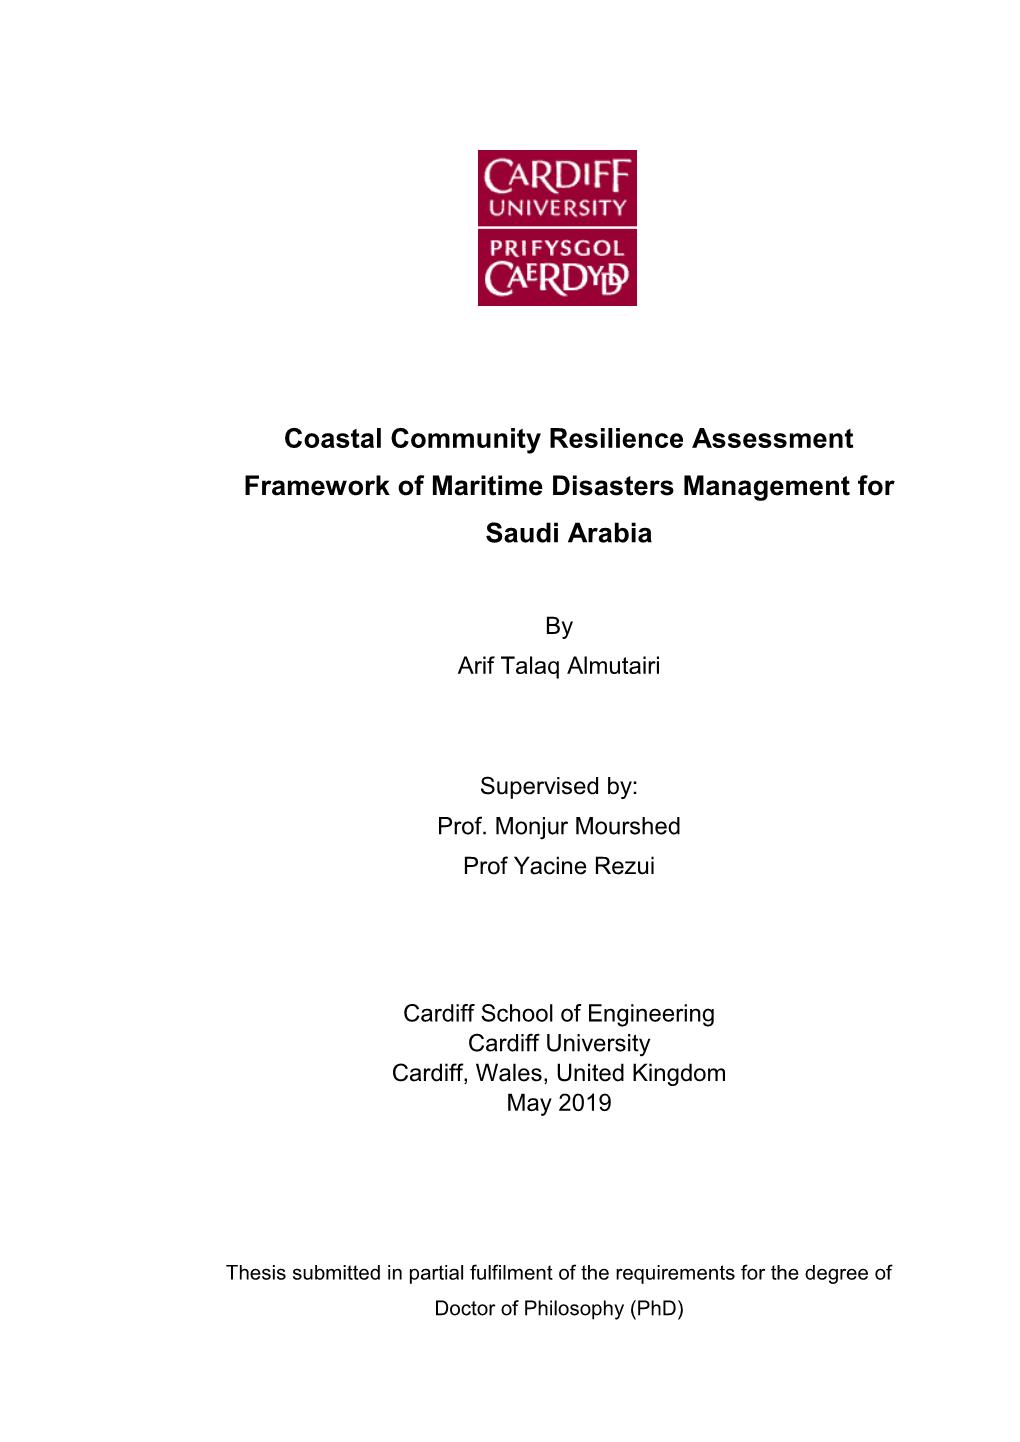 Coastal Community Resilience Assessment Framework of Maritime Disasters Management for Saudi Arabia